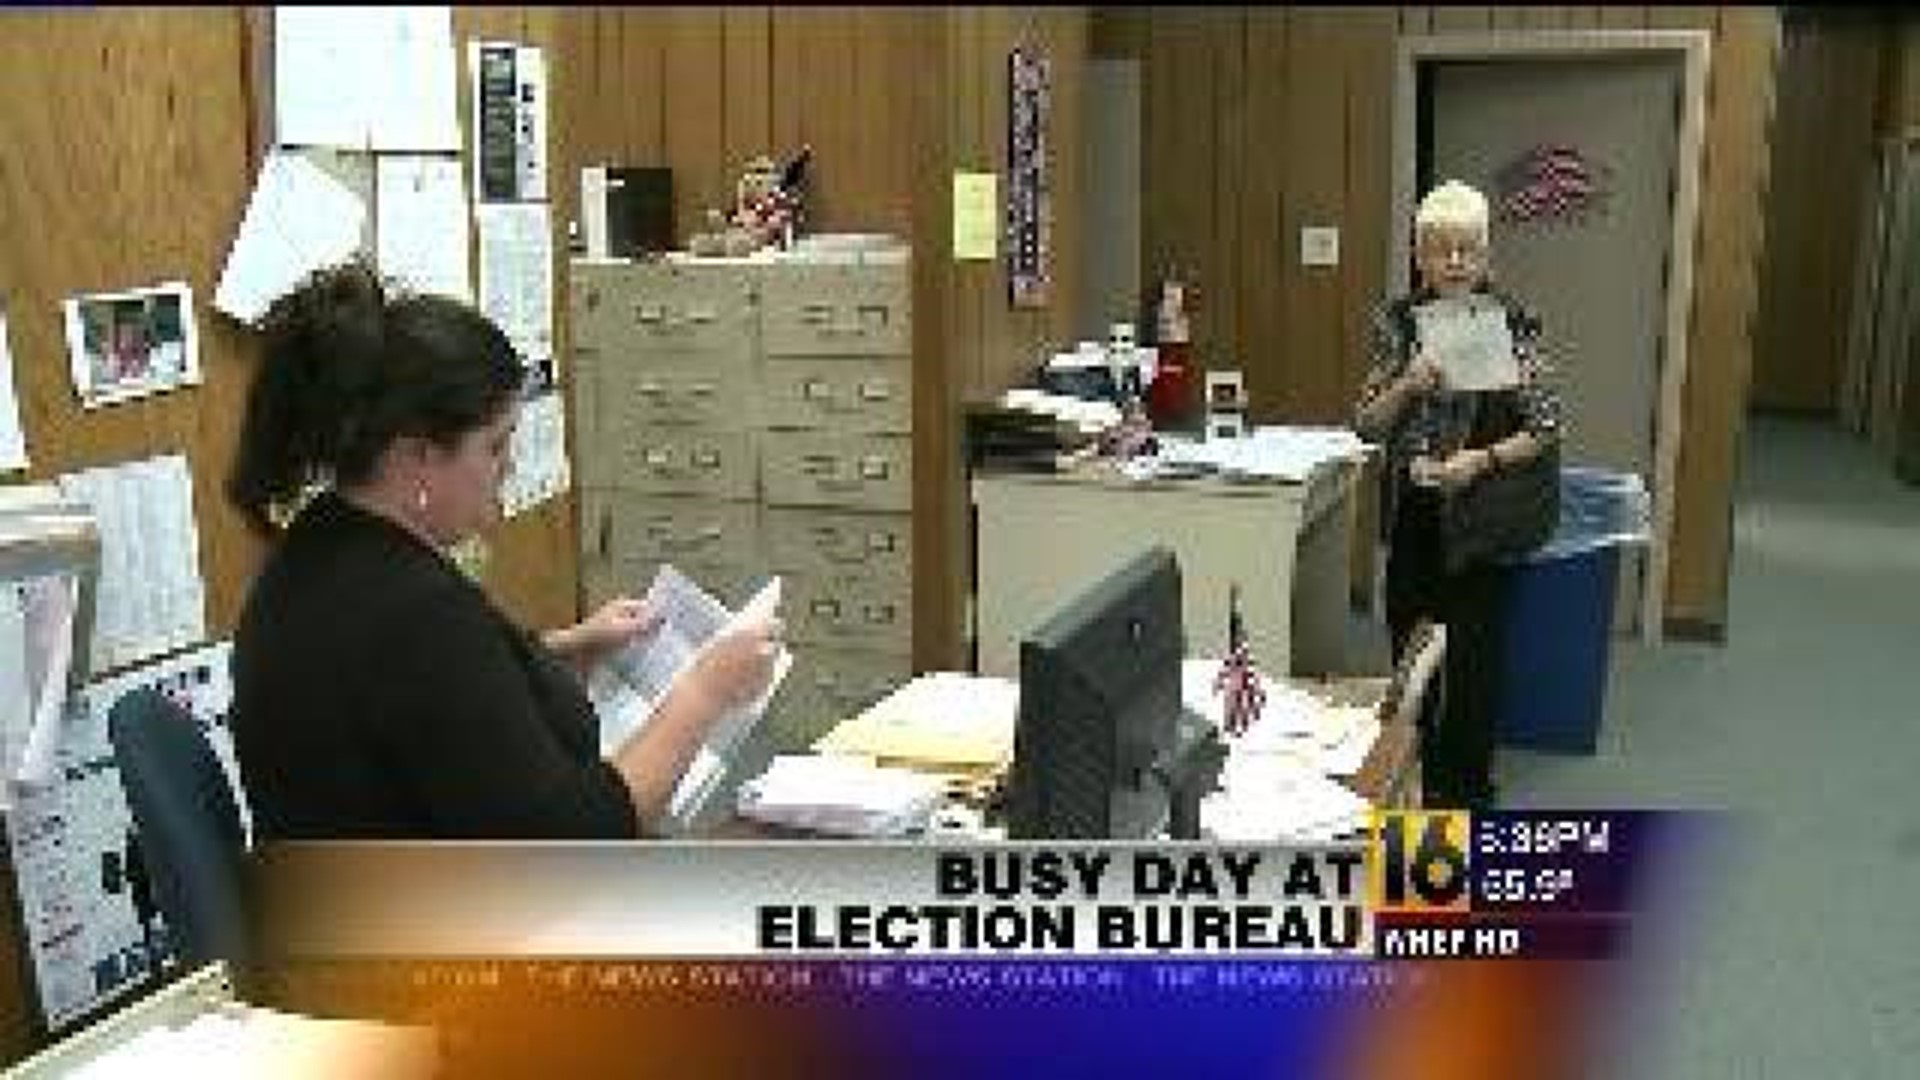 Election Bureau Busy